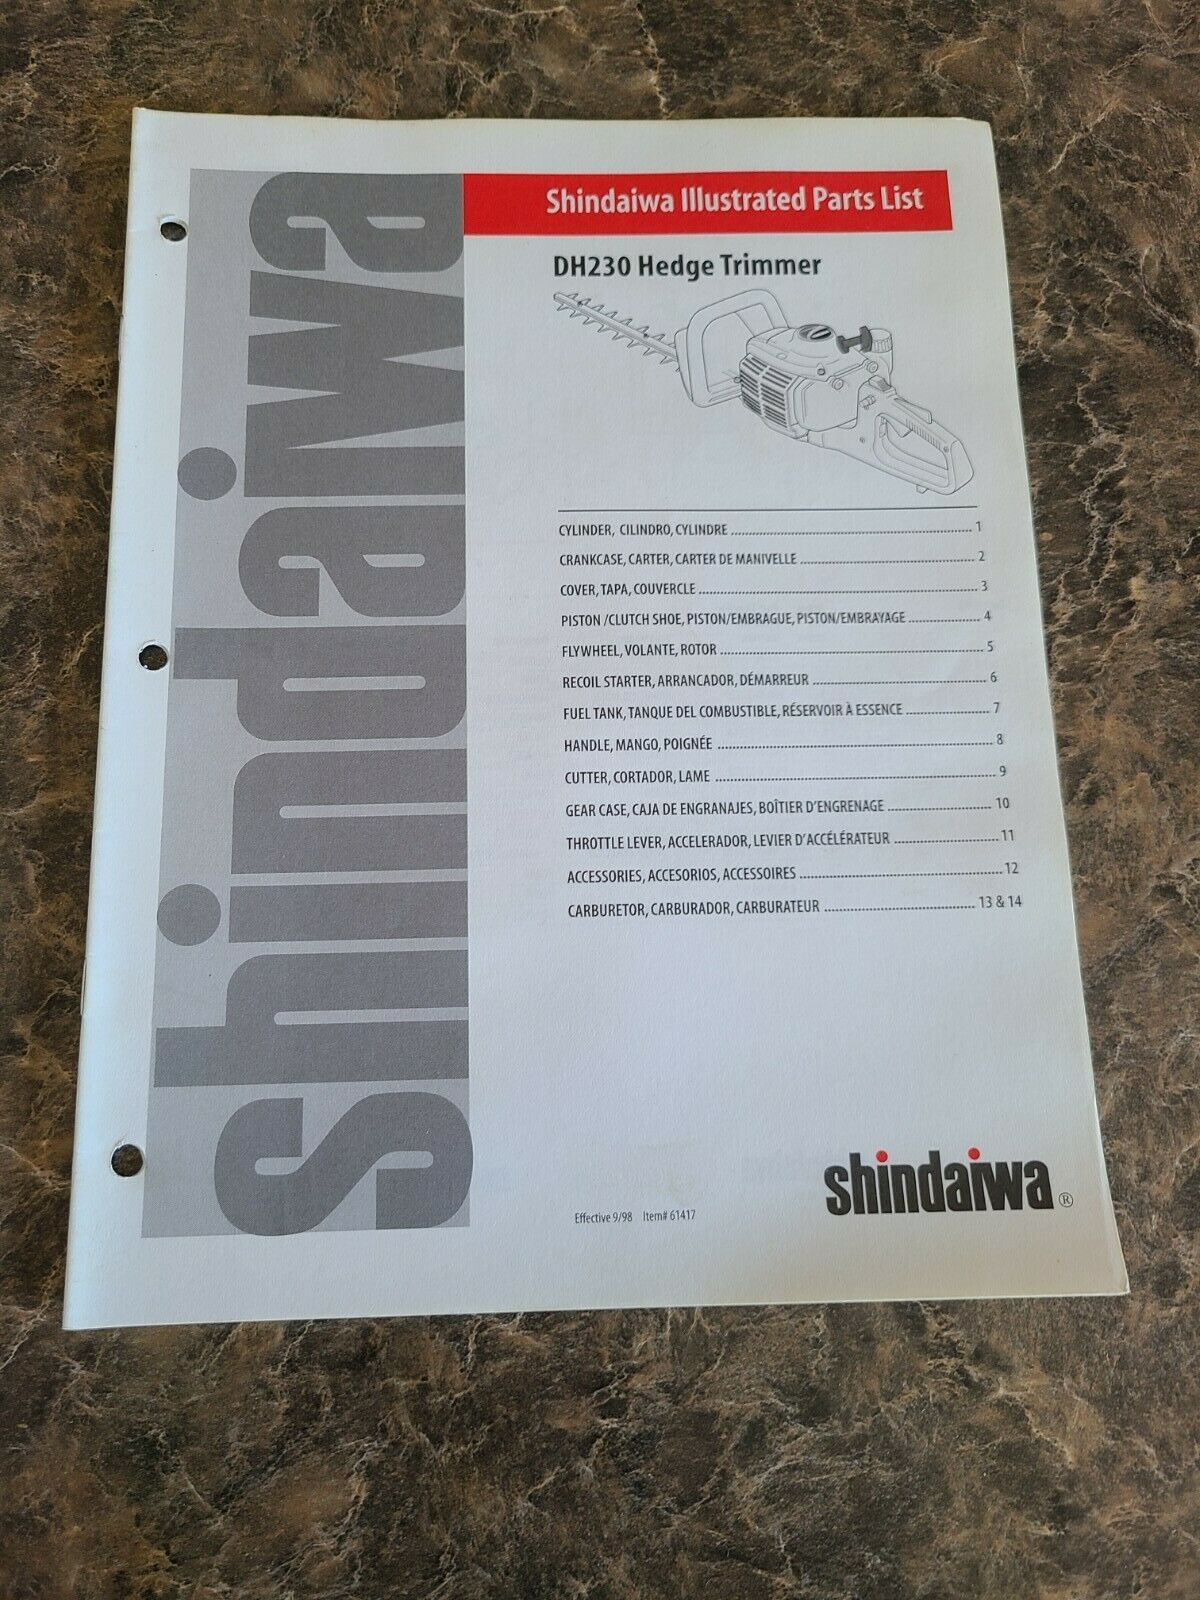 Shindaiwa Dh230 Hedge Trimmer Illustrated Parts List Manual 1998 Original